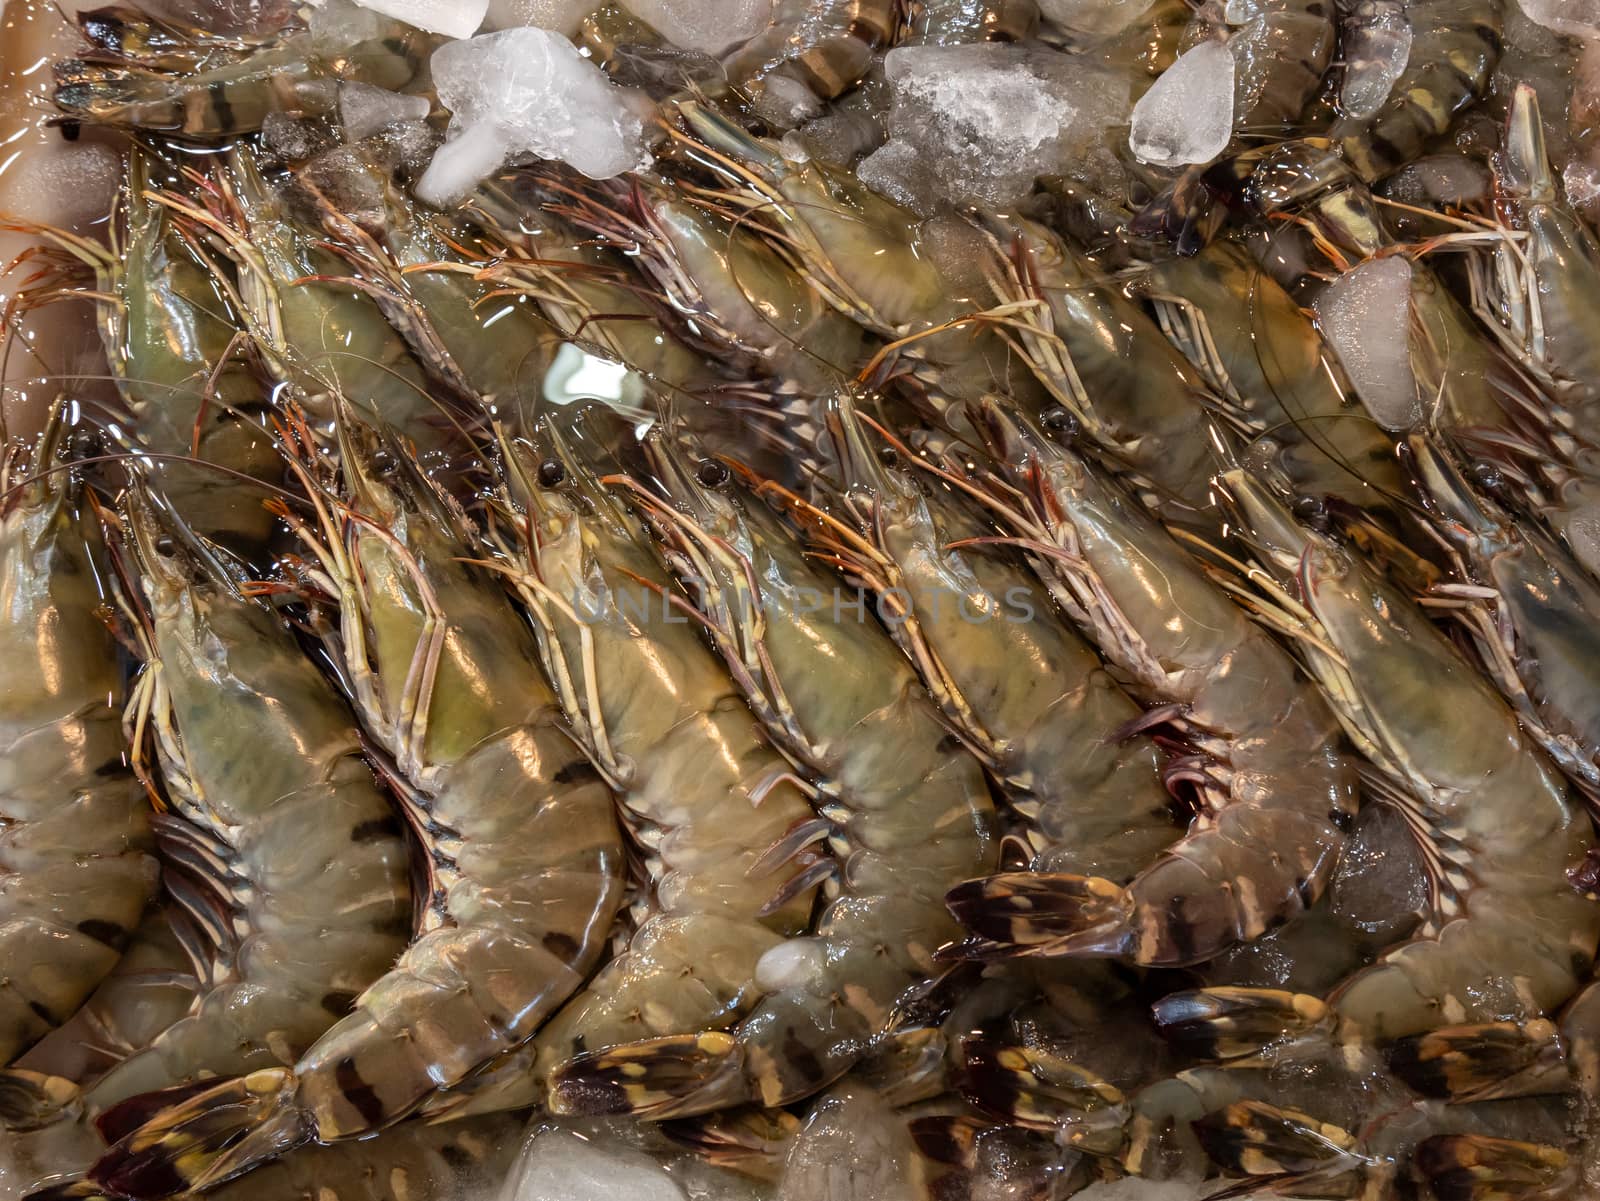 Fresh Black tiger shrimps on crushed ice at Thai seafood market. by Amankris